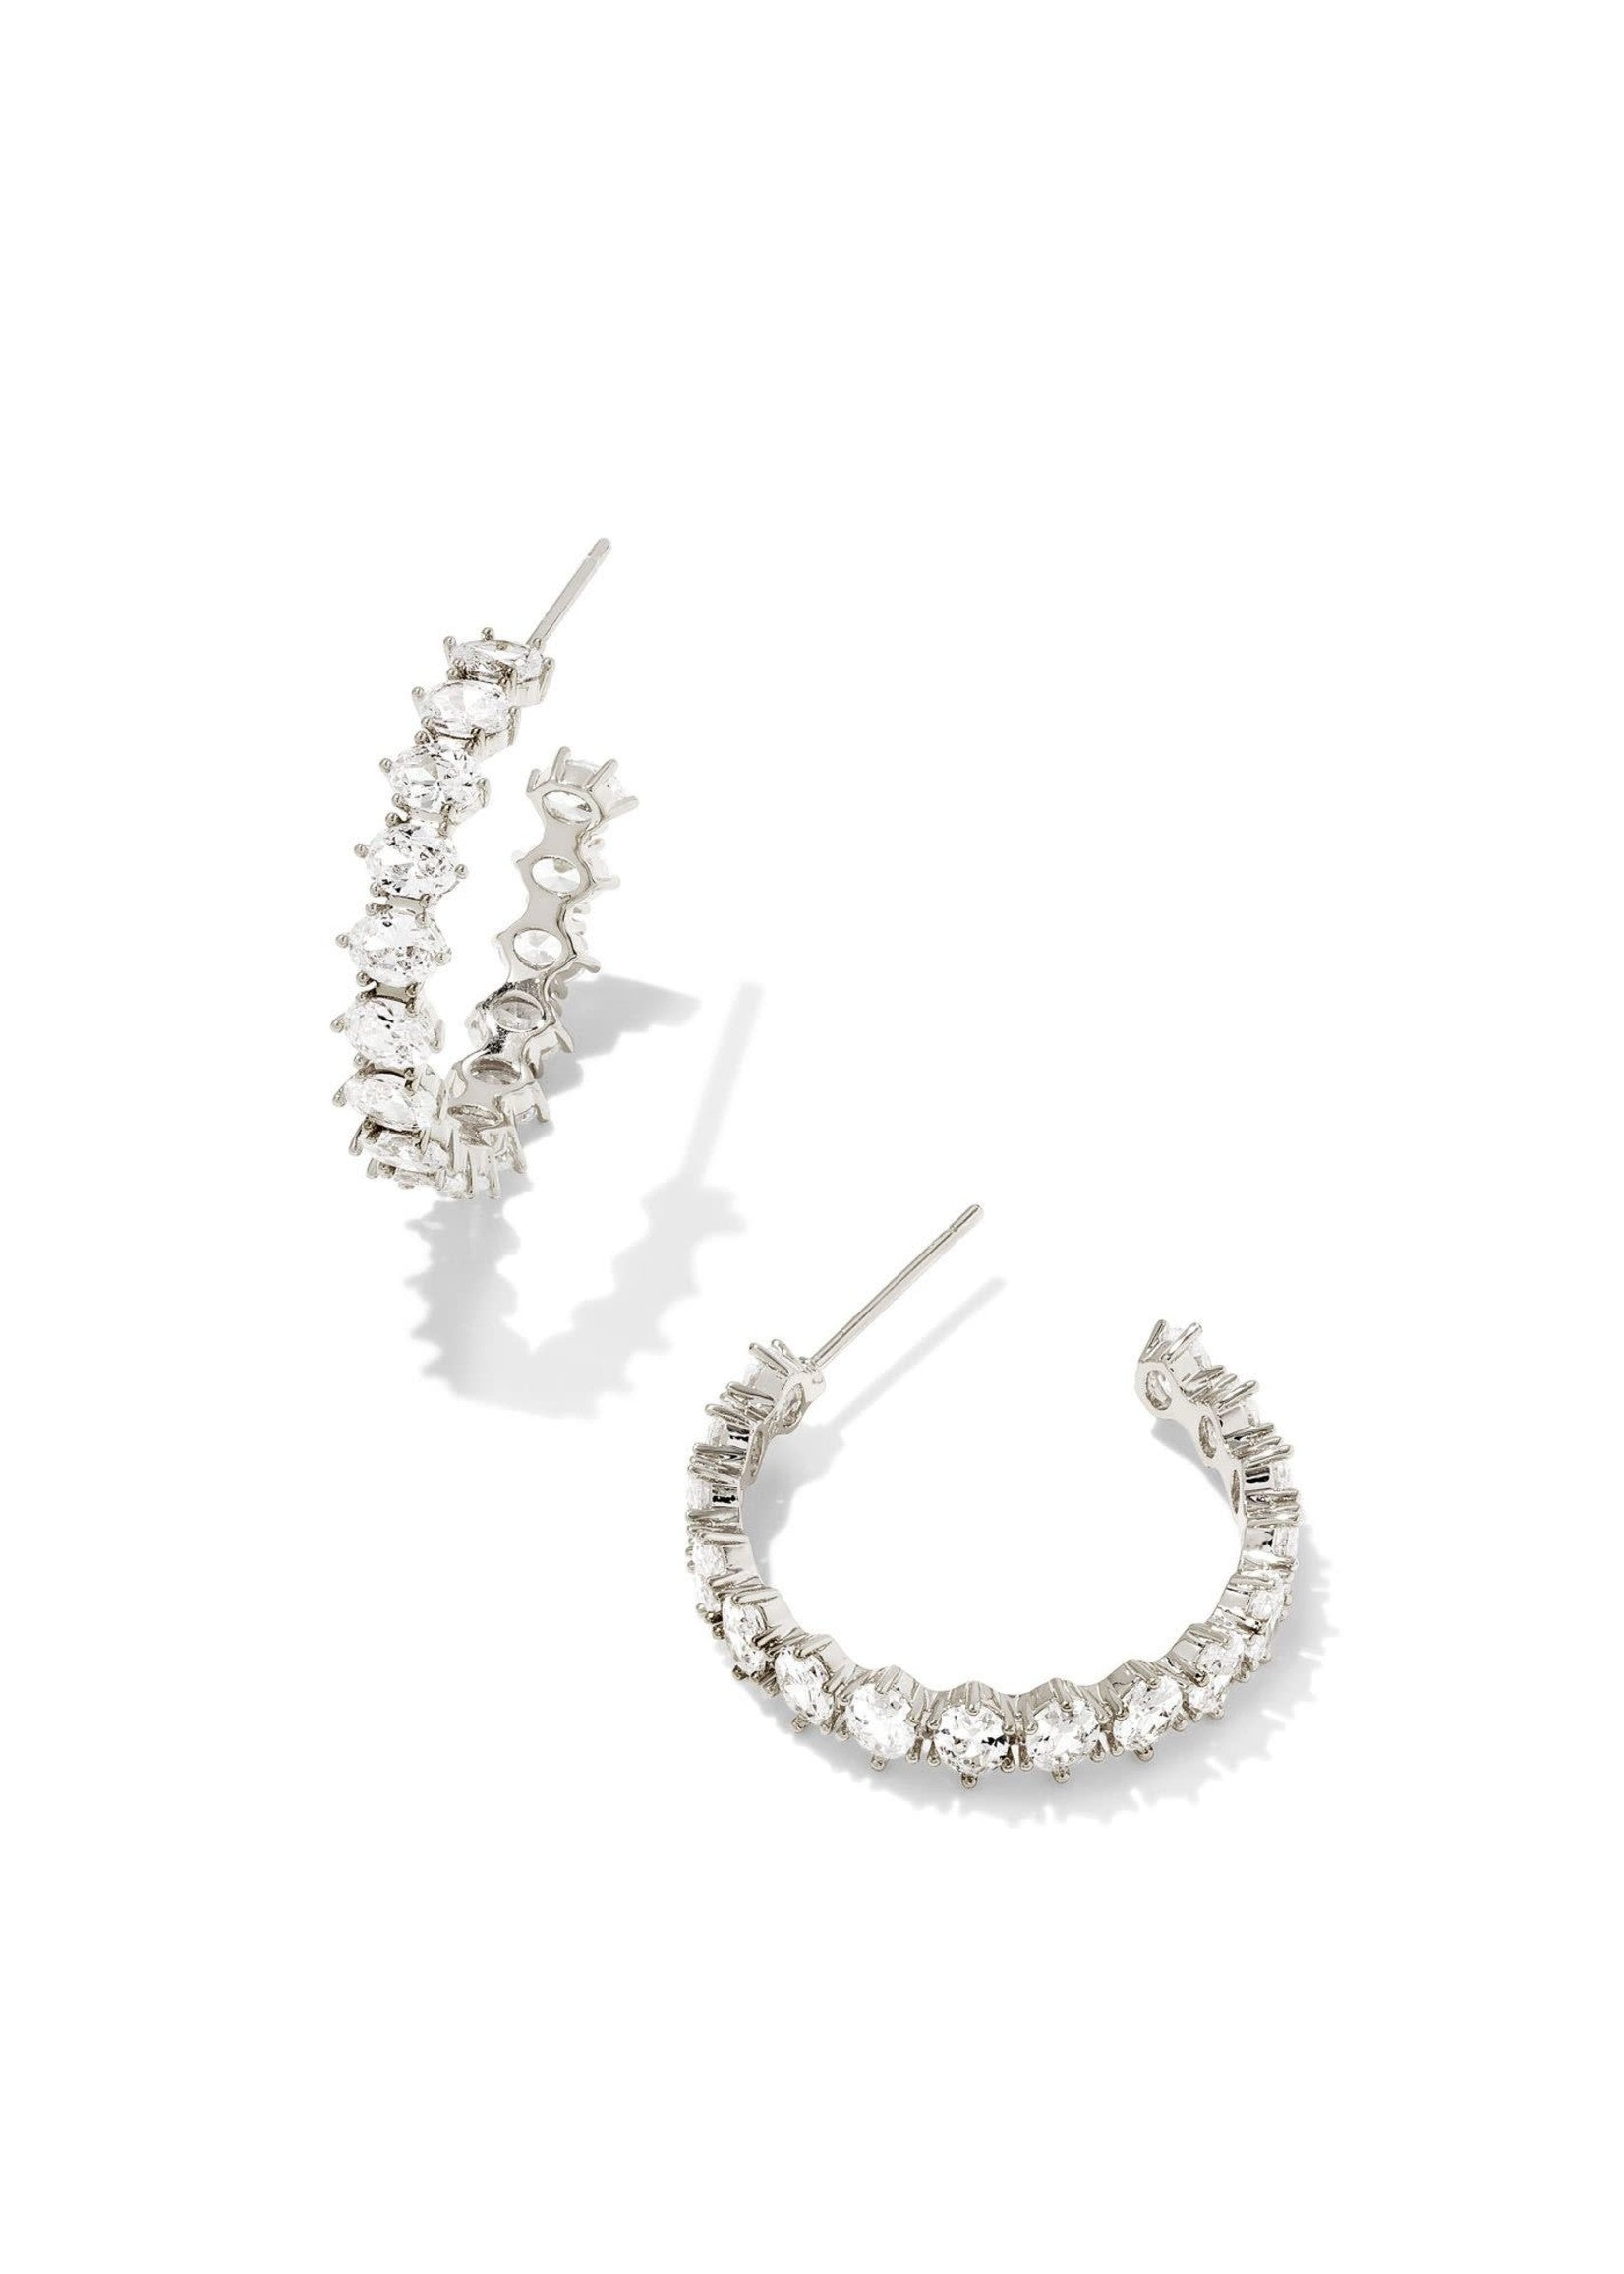 Kendra Scott Cailin Crystal Hoop Earrings Rhodium Metal White CZ-Earrings-Kendra Scott-E2067RHD-The Twisted Chandelier